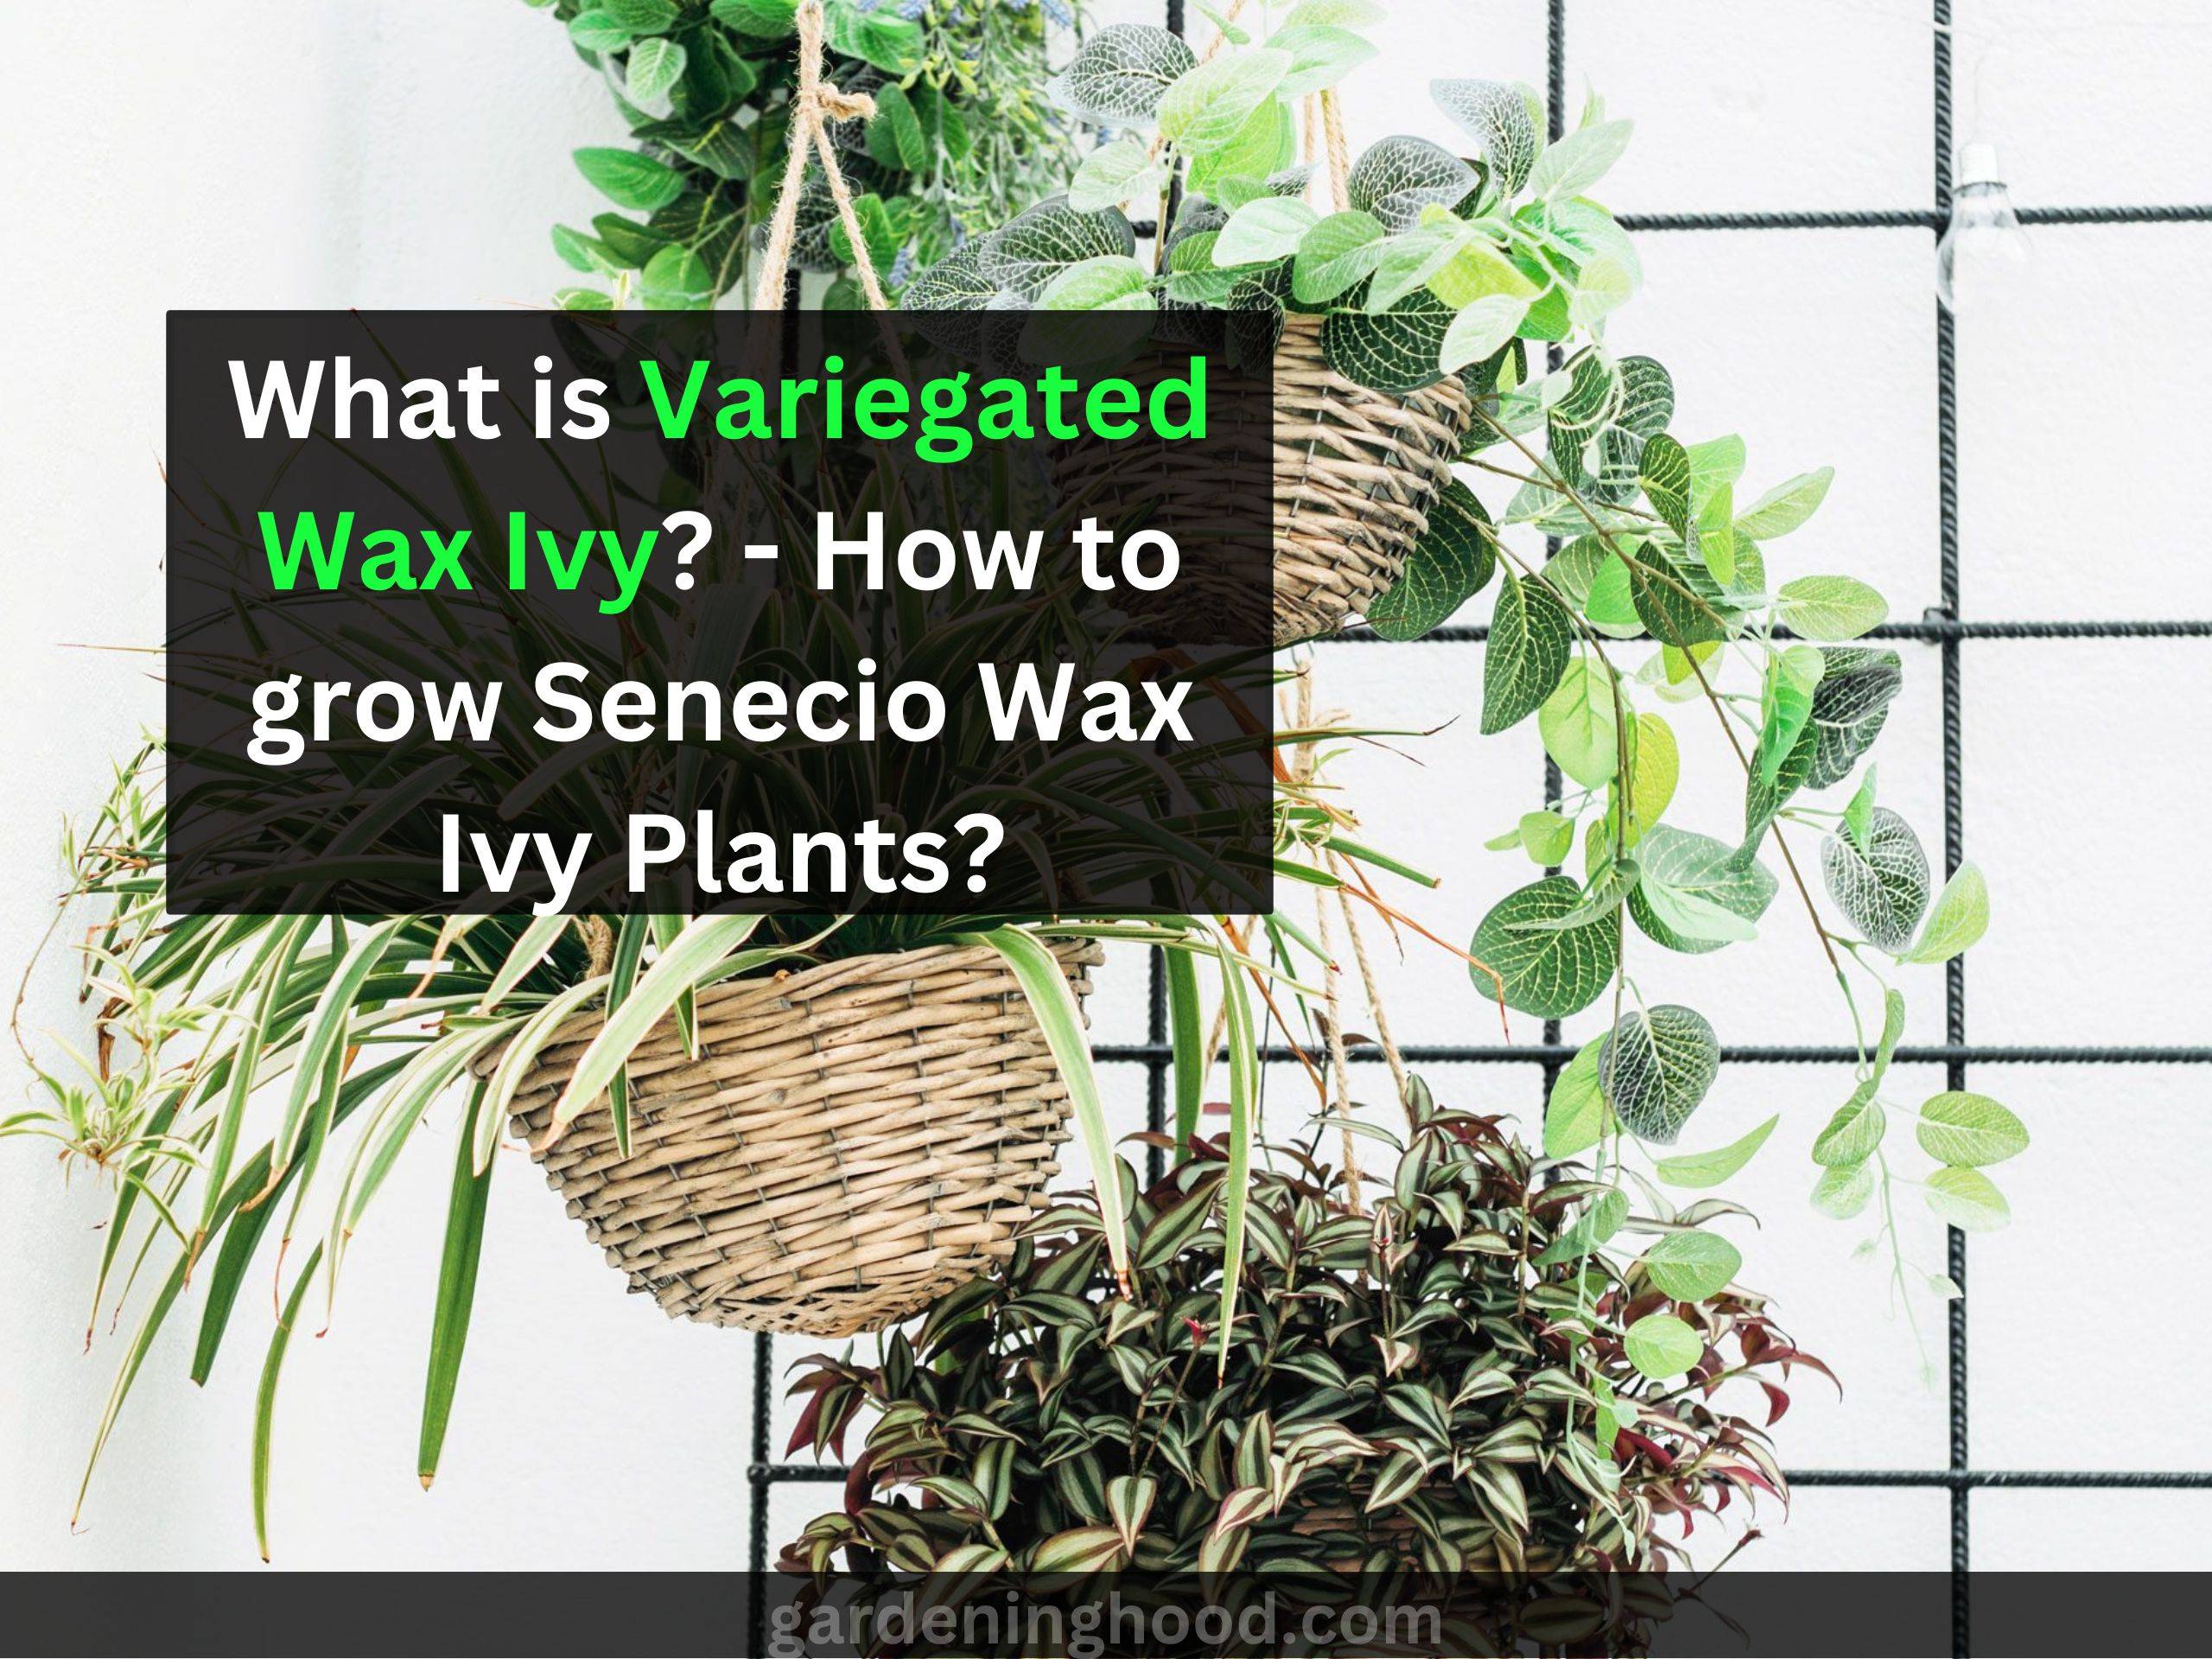 What is Variegated Wax Ivy? - How to grow Senecio Wax Ivy Plants?